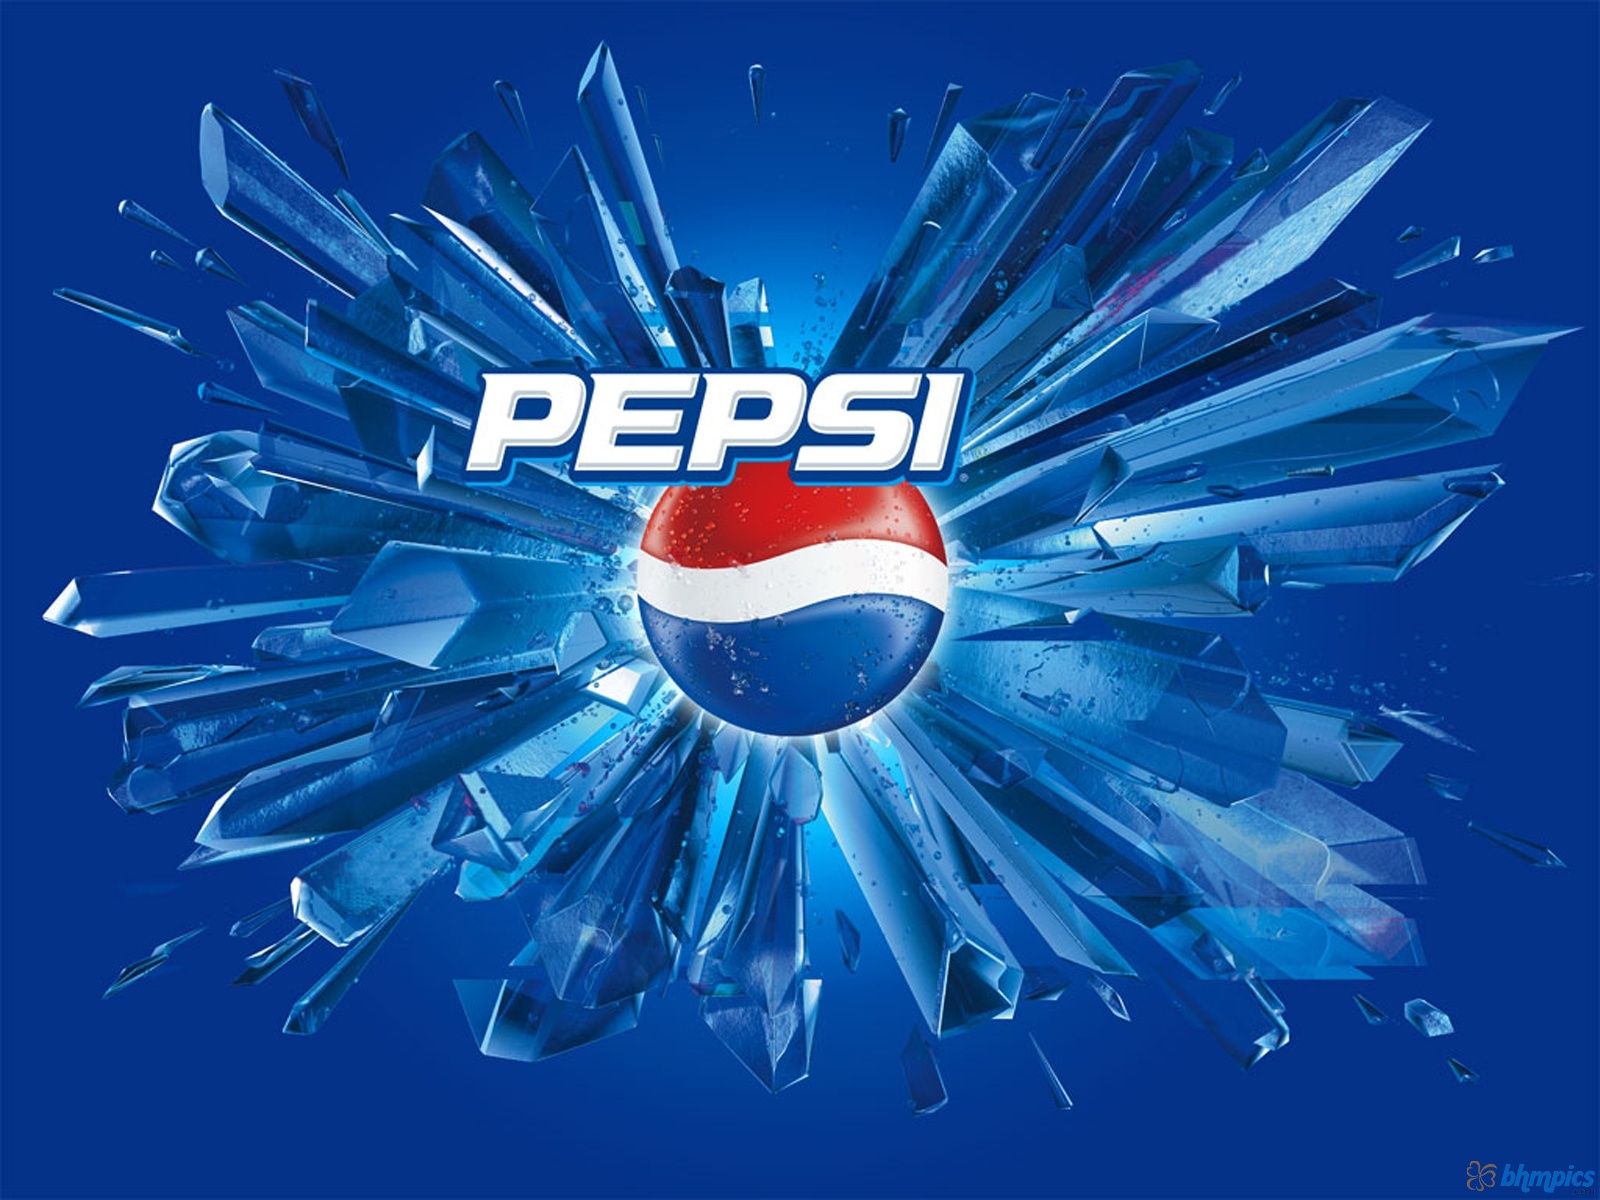 Pepsi Logo Texan In The Philippines